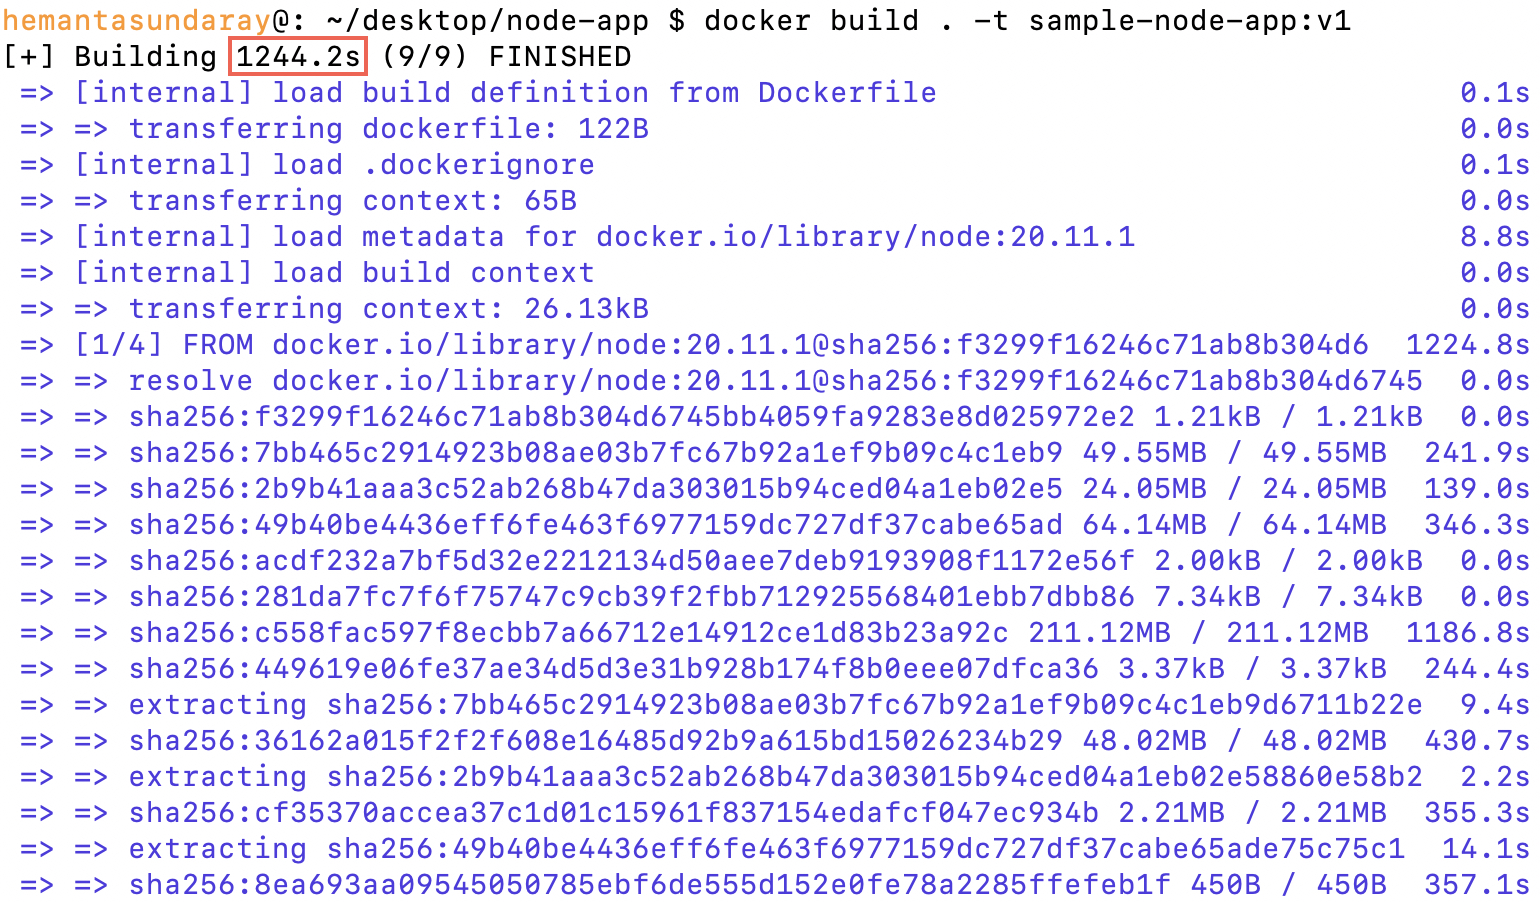 docker build command output